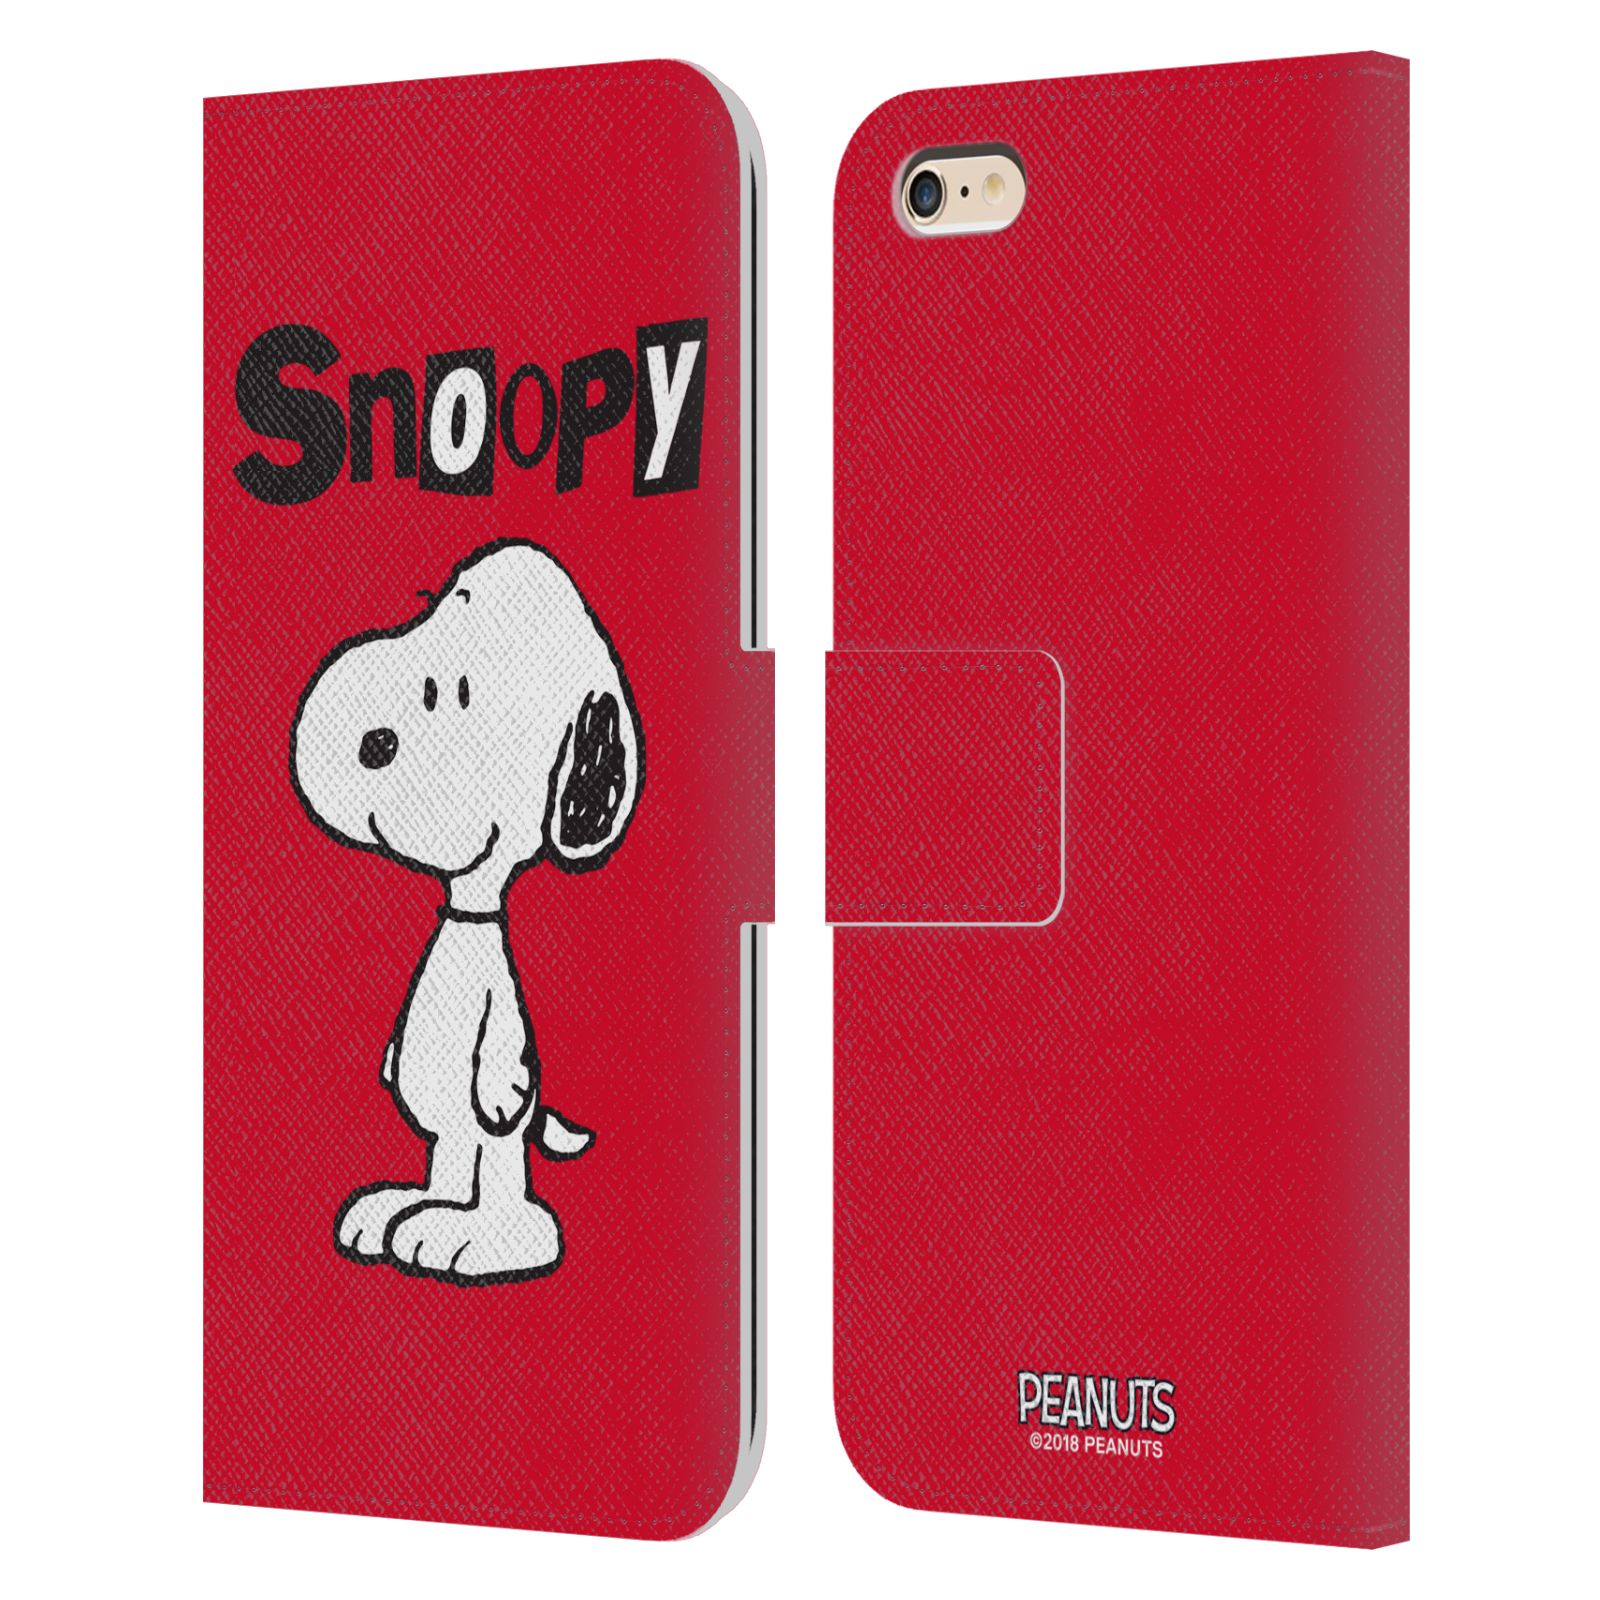 Pouzdro na mobil Apple Iphone 6 PLUS / 6S PLUS - HEAD CASE - Peanuts - Snoopy červená